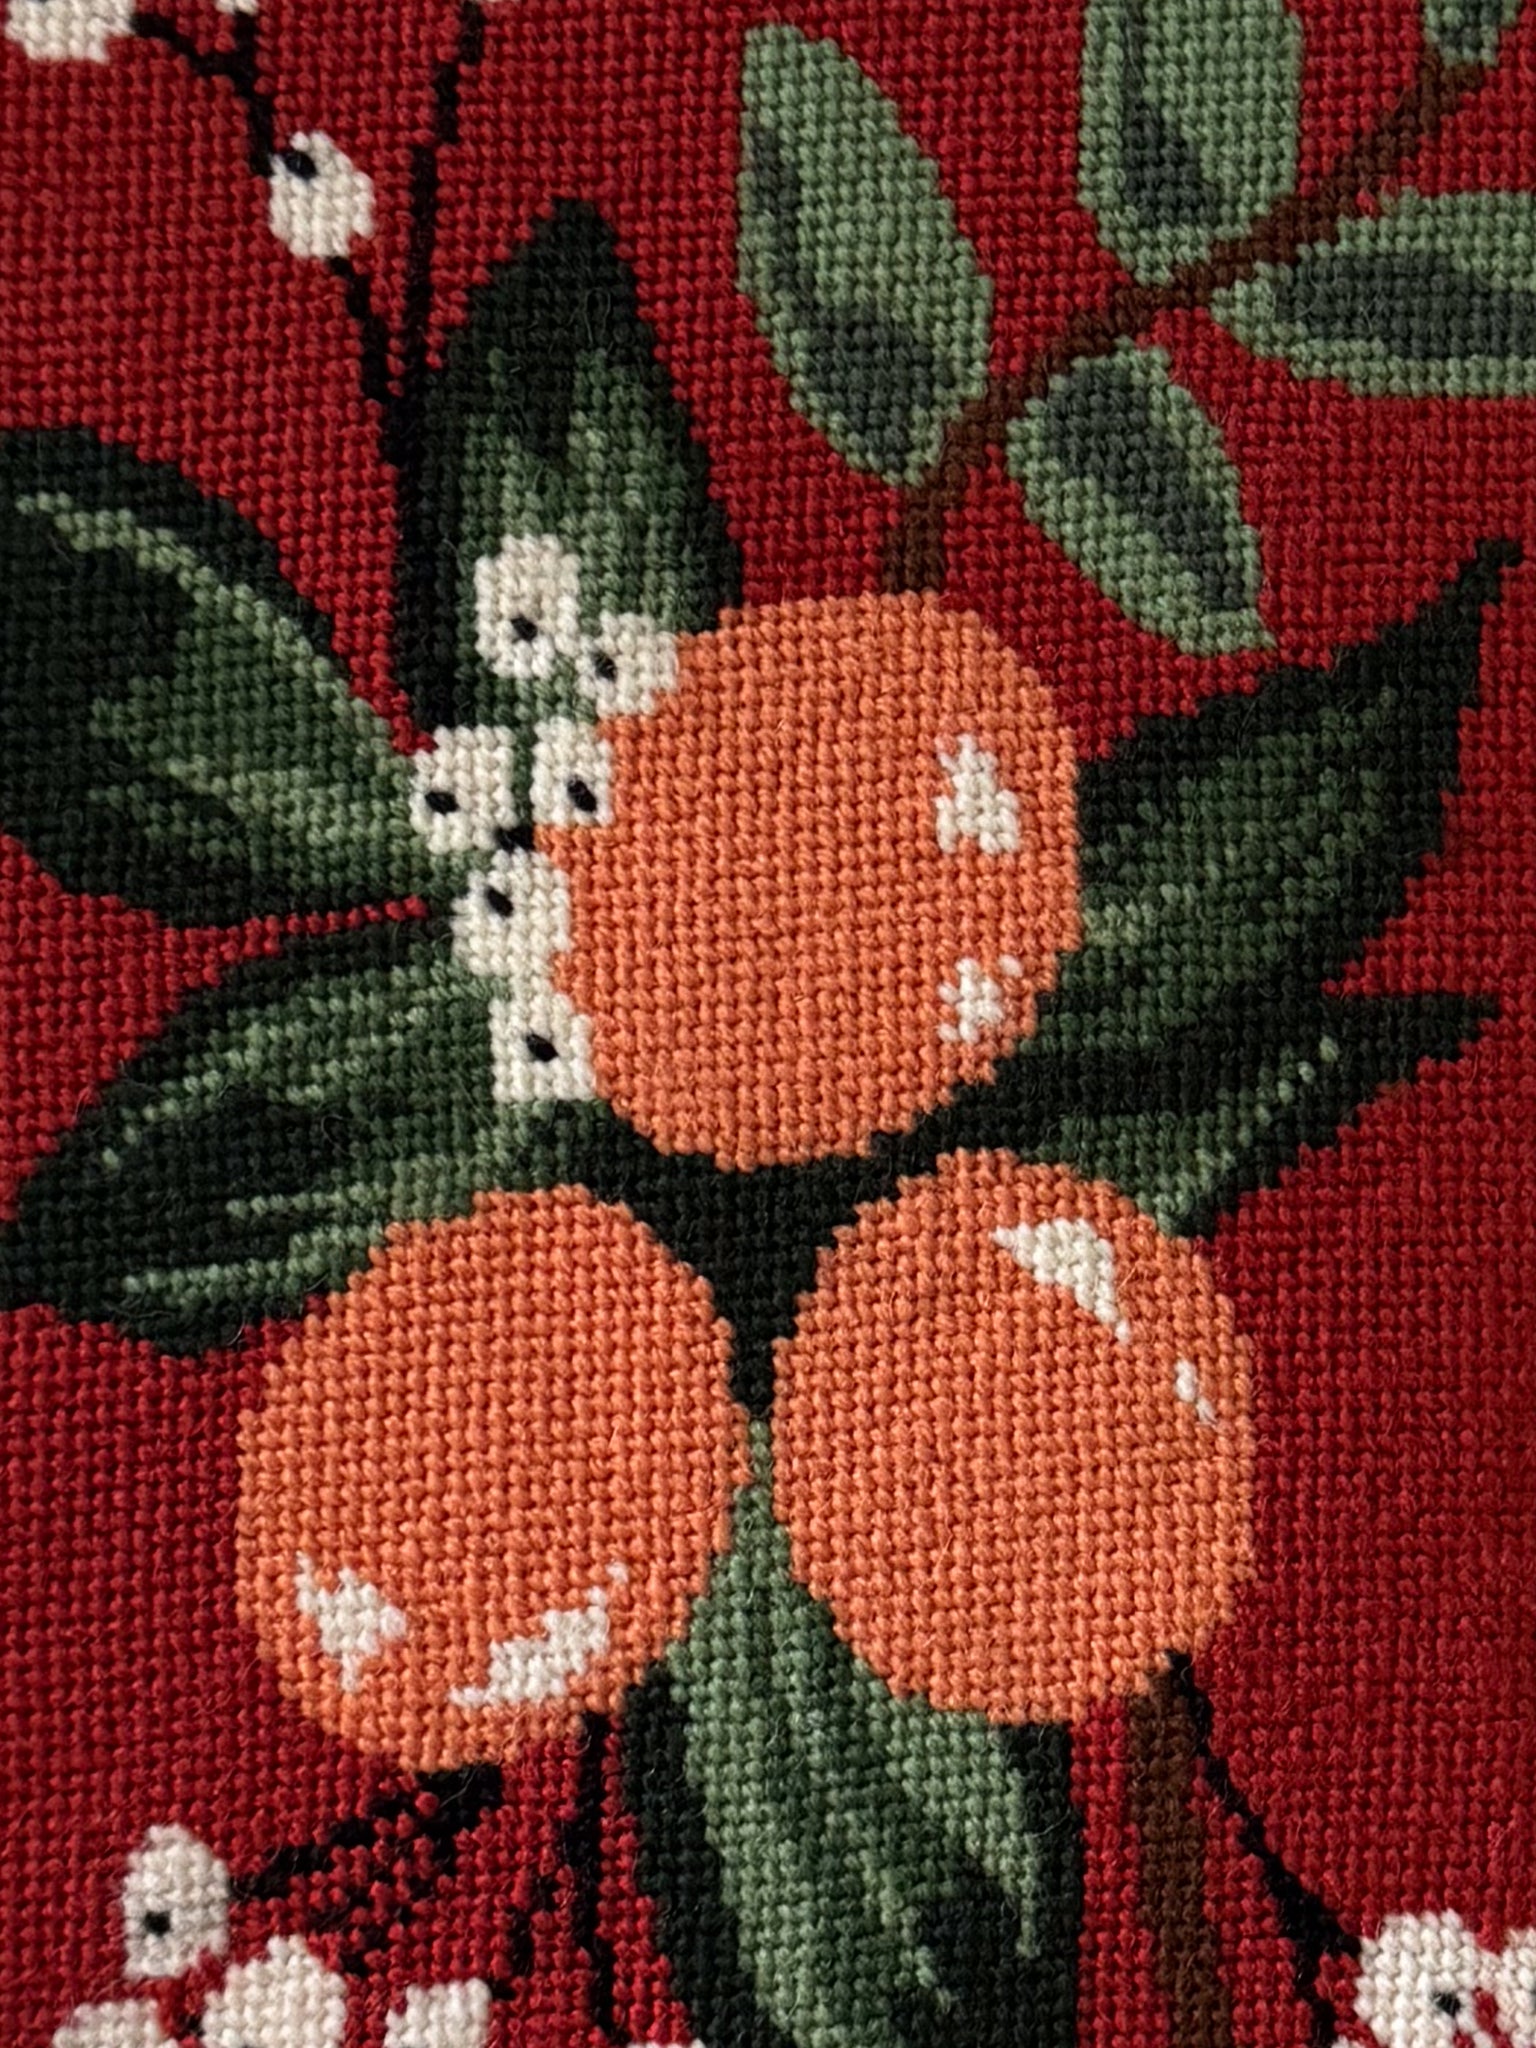 Stitched Stocking - Clementine